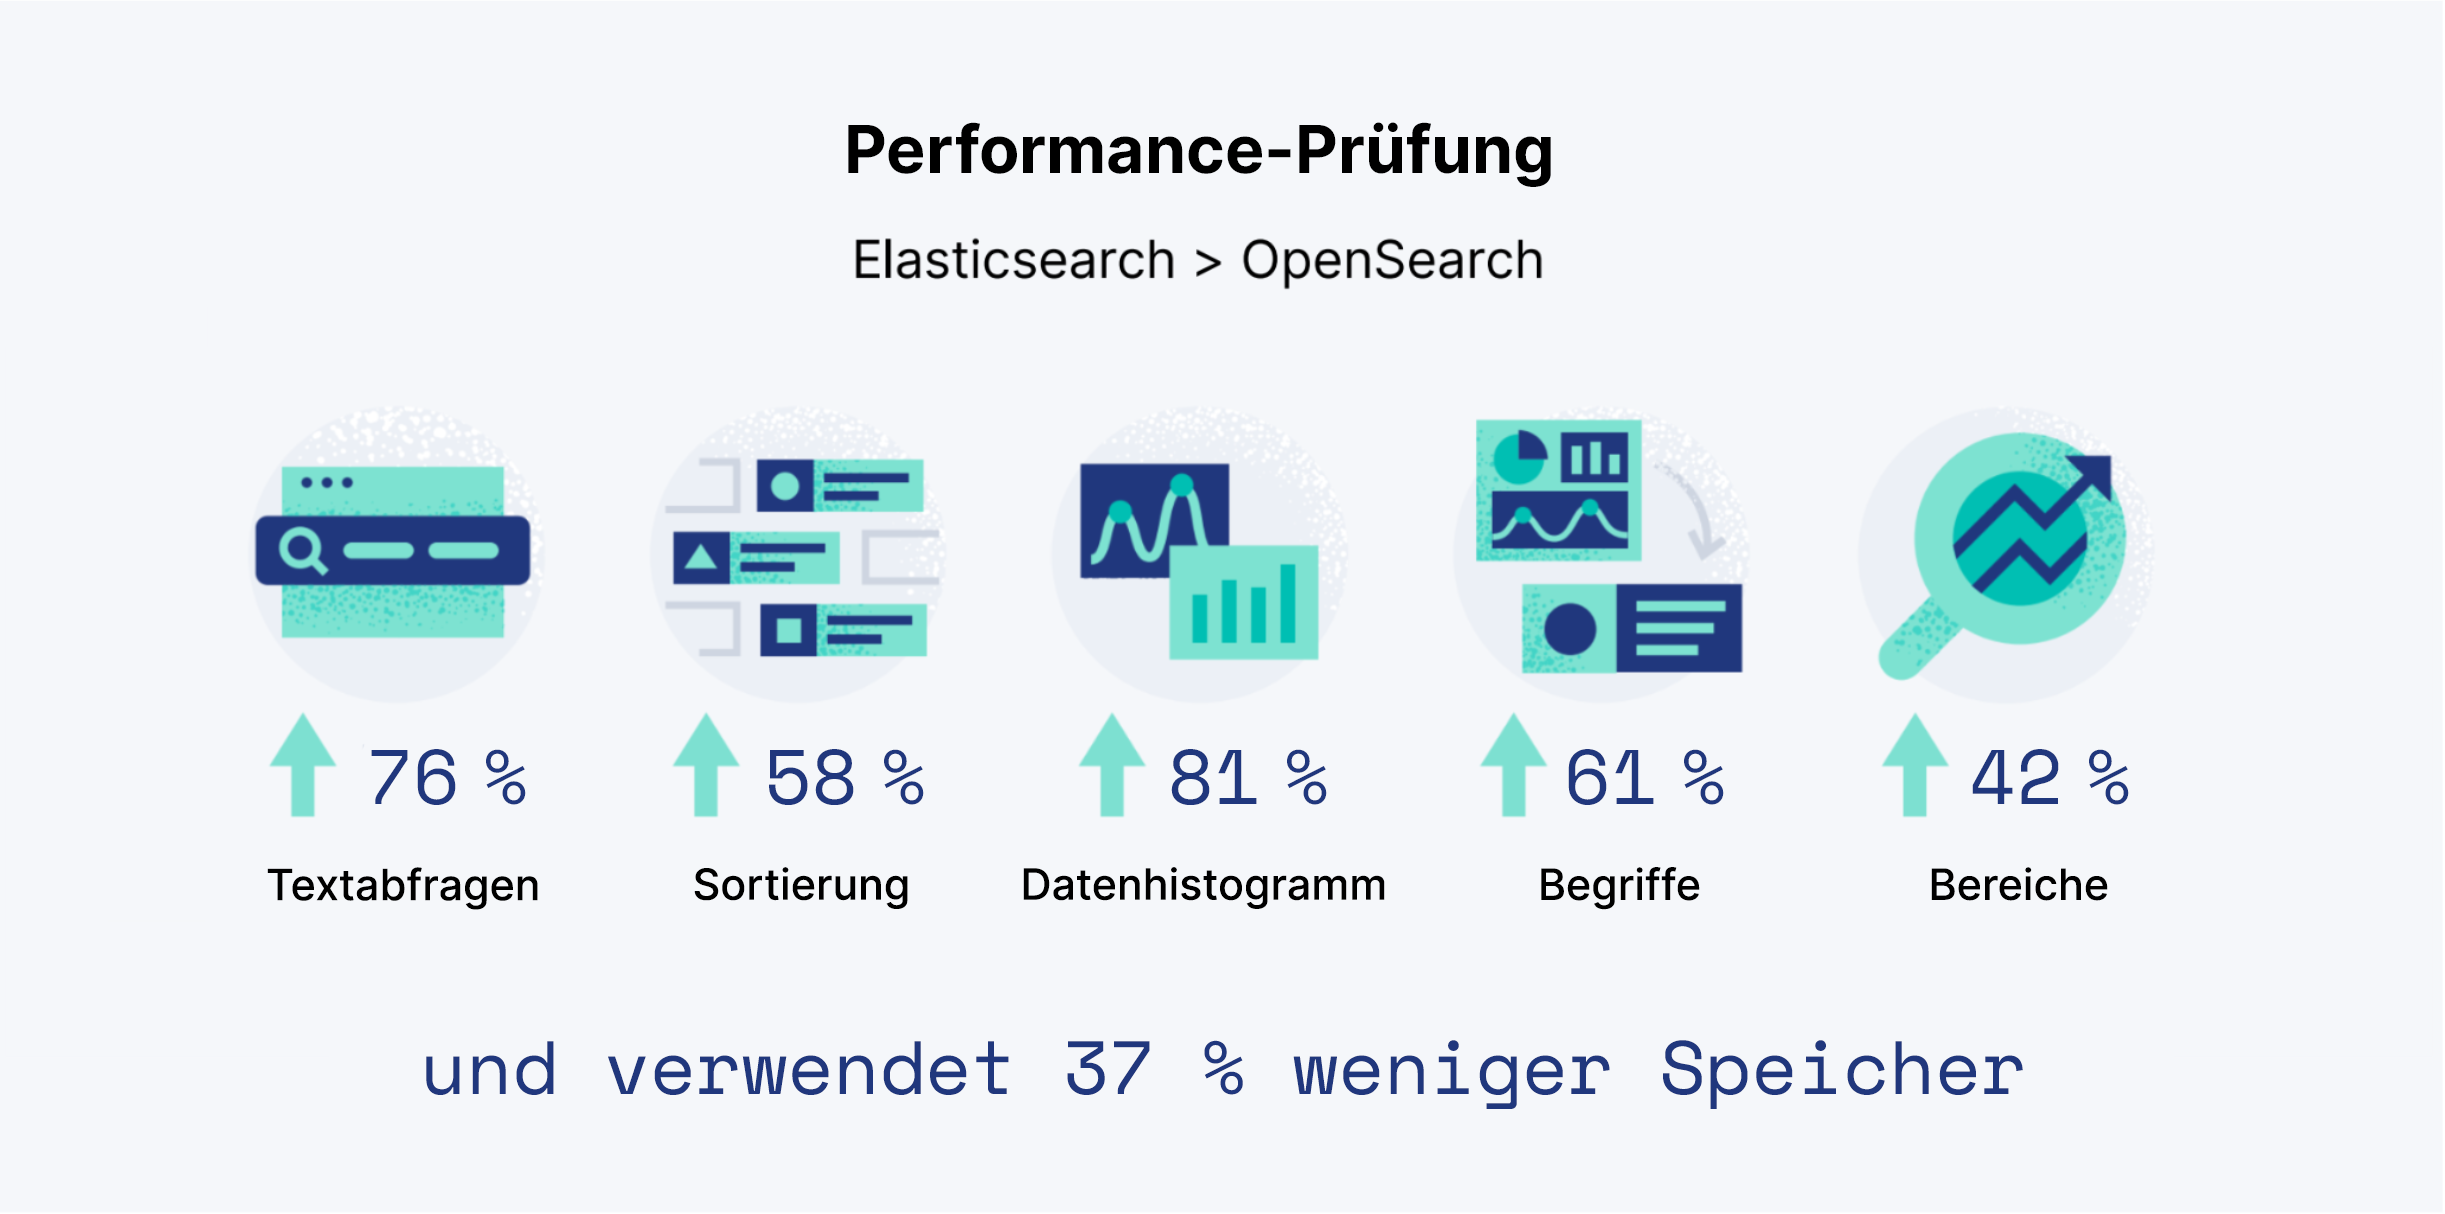 Performance-Prüfung: Elasticsearch > Opensearch